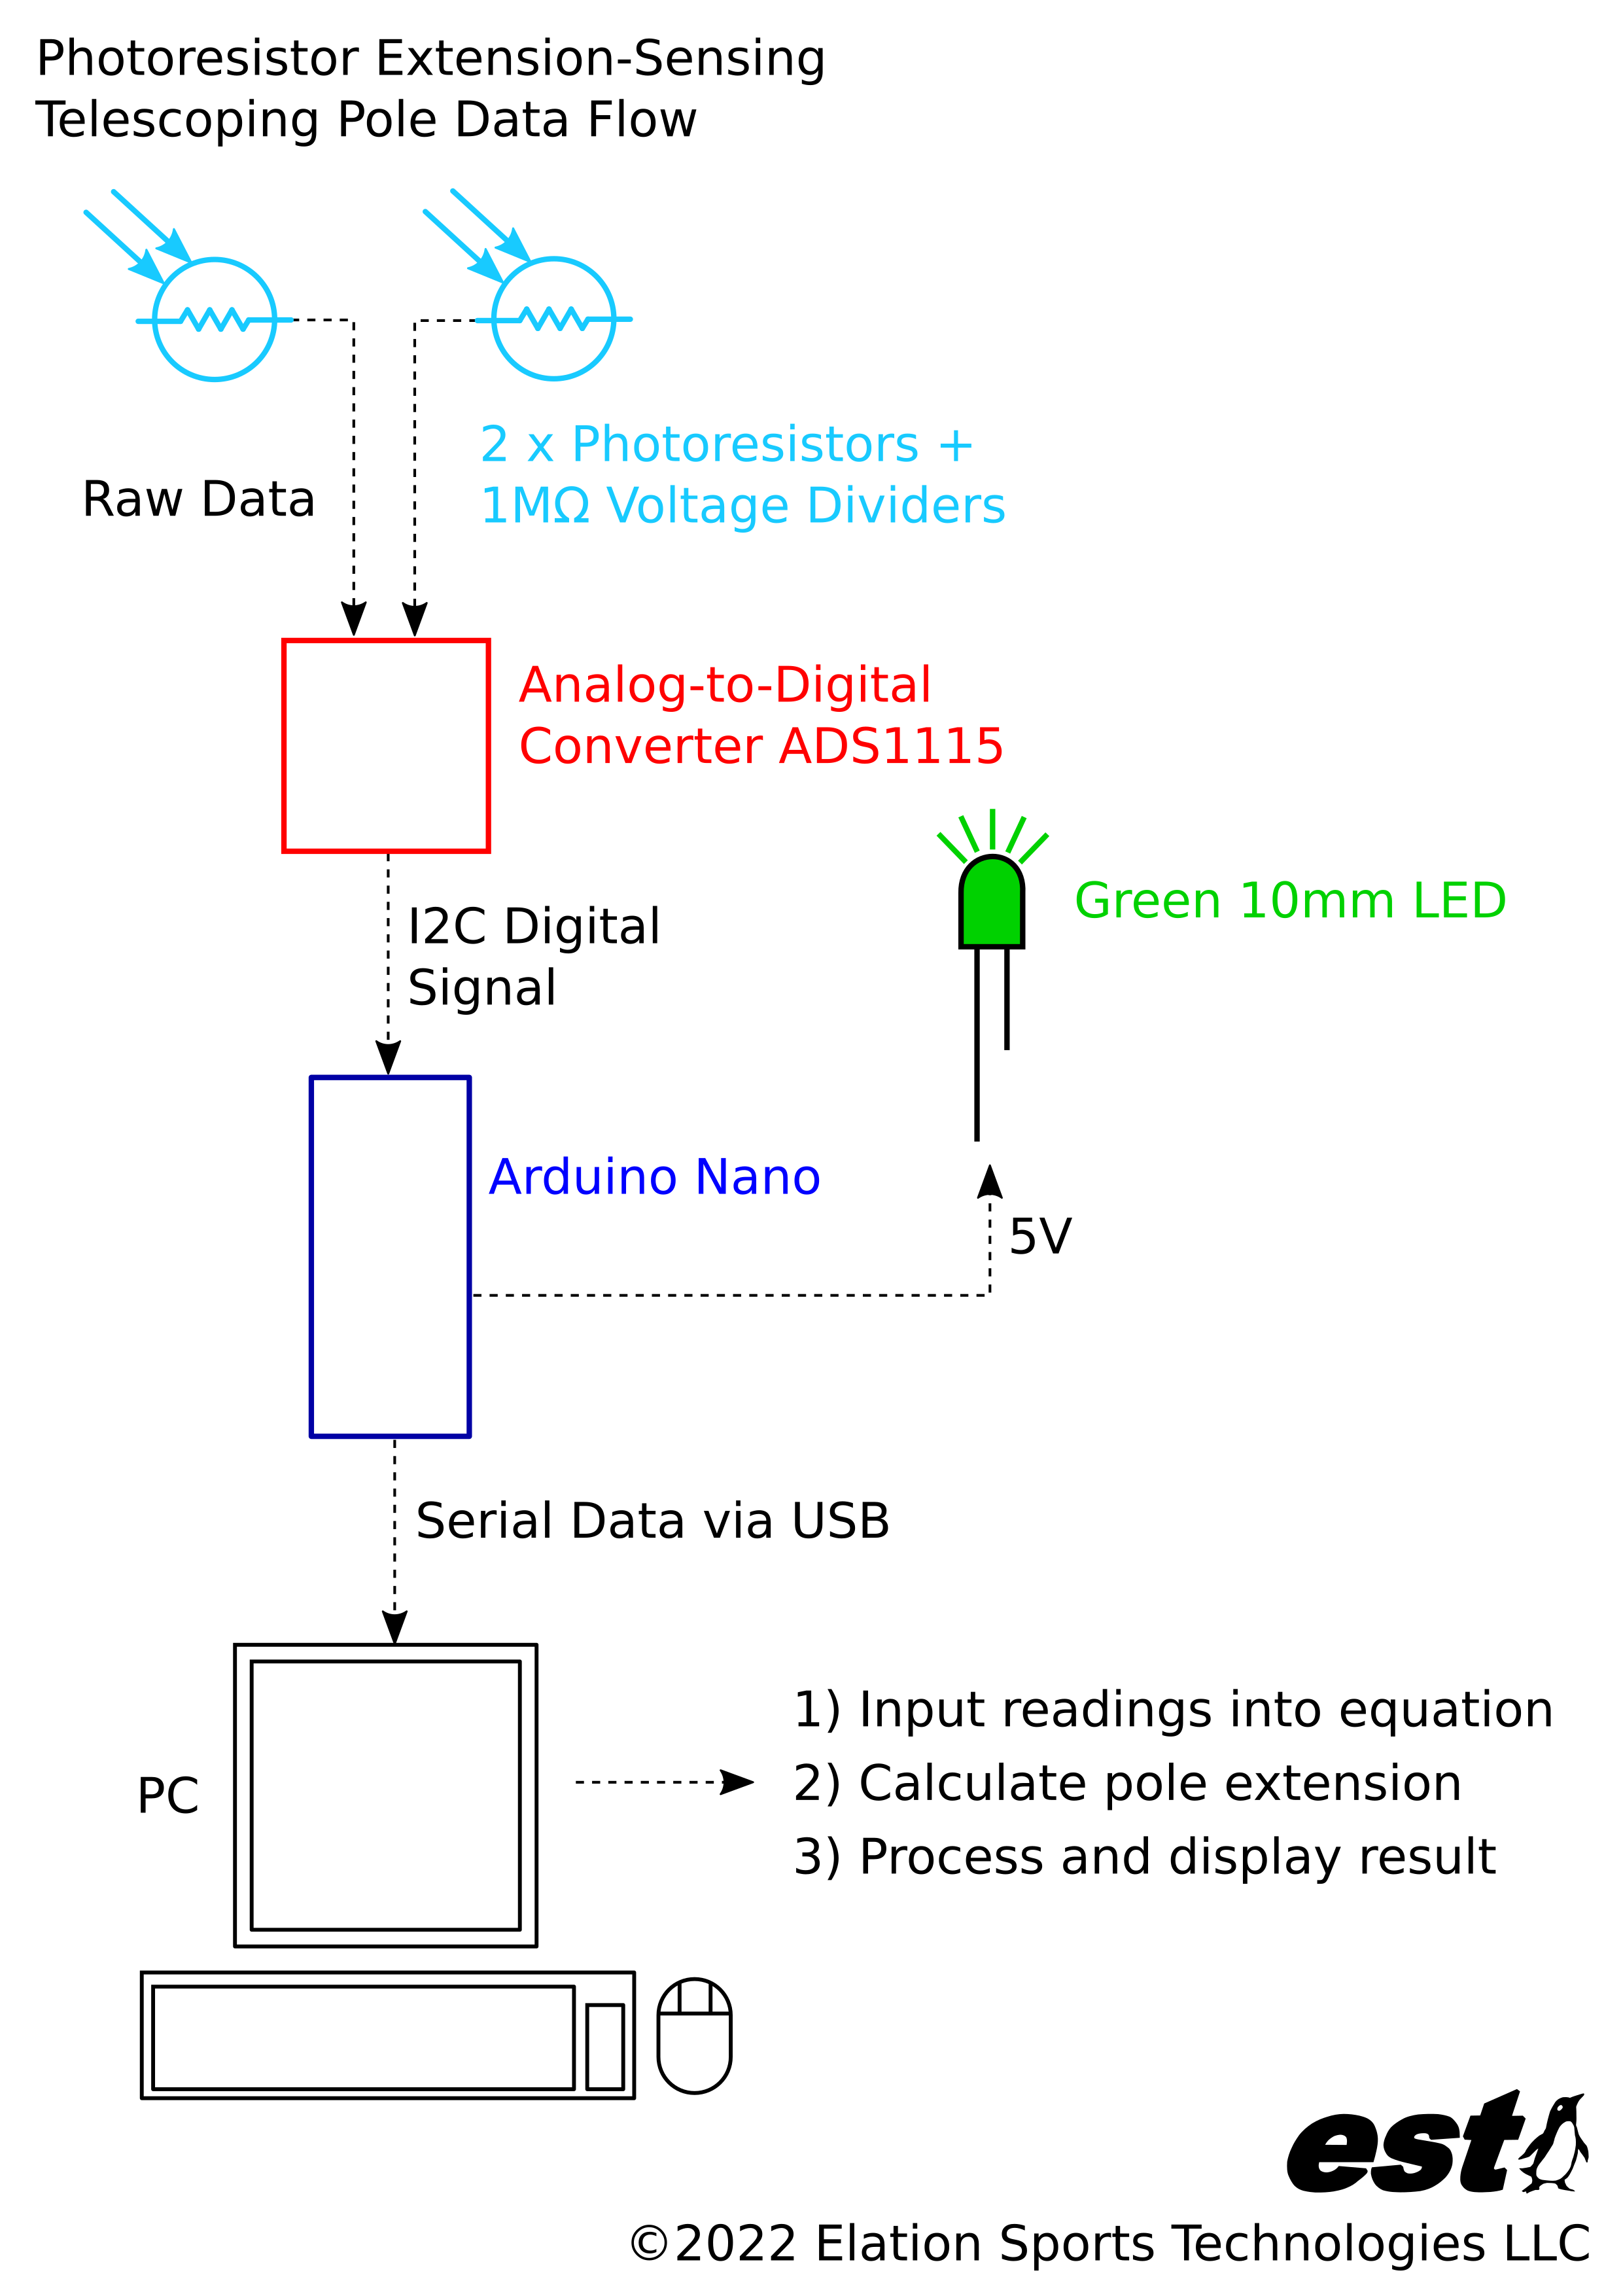 I & E Data Collection Extension Pole